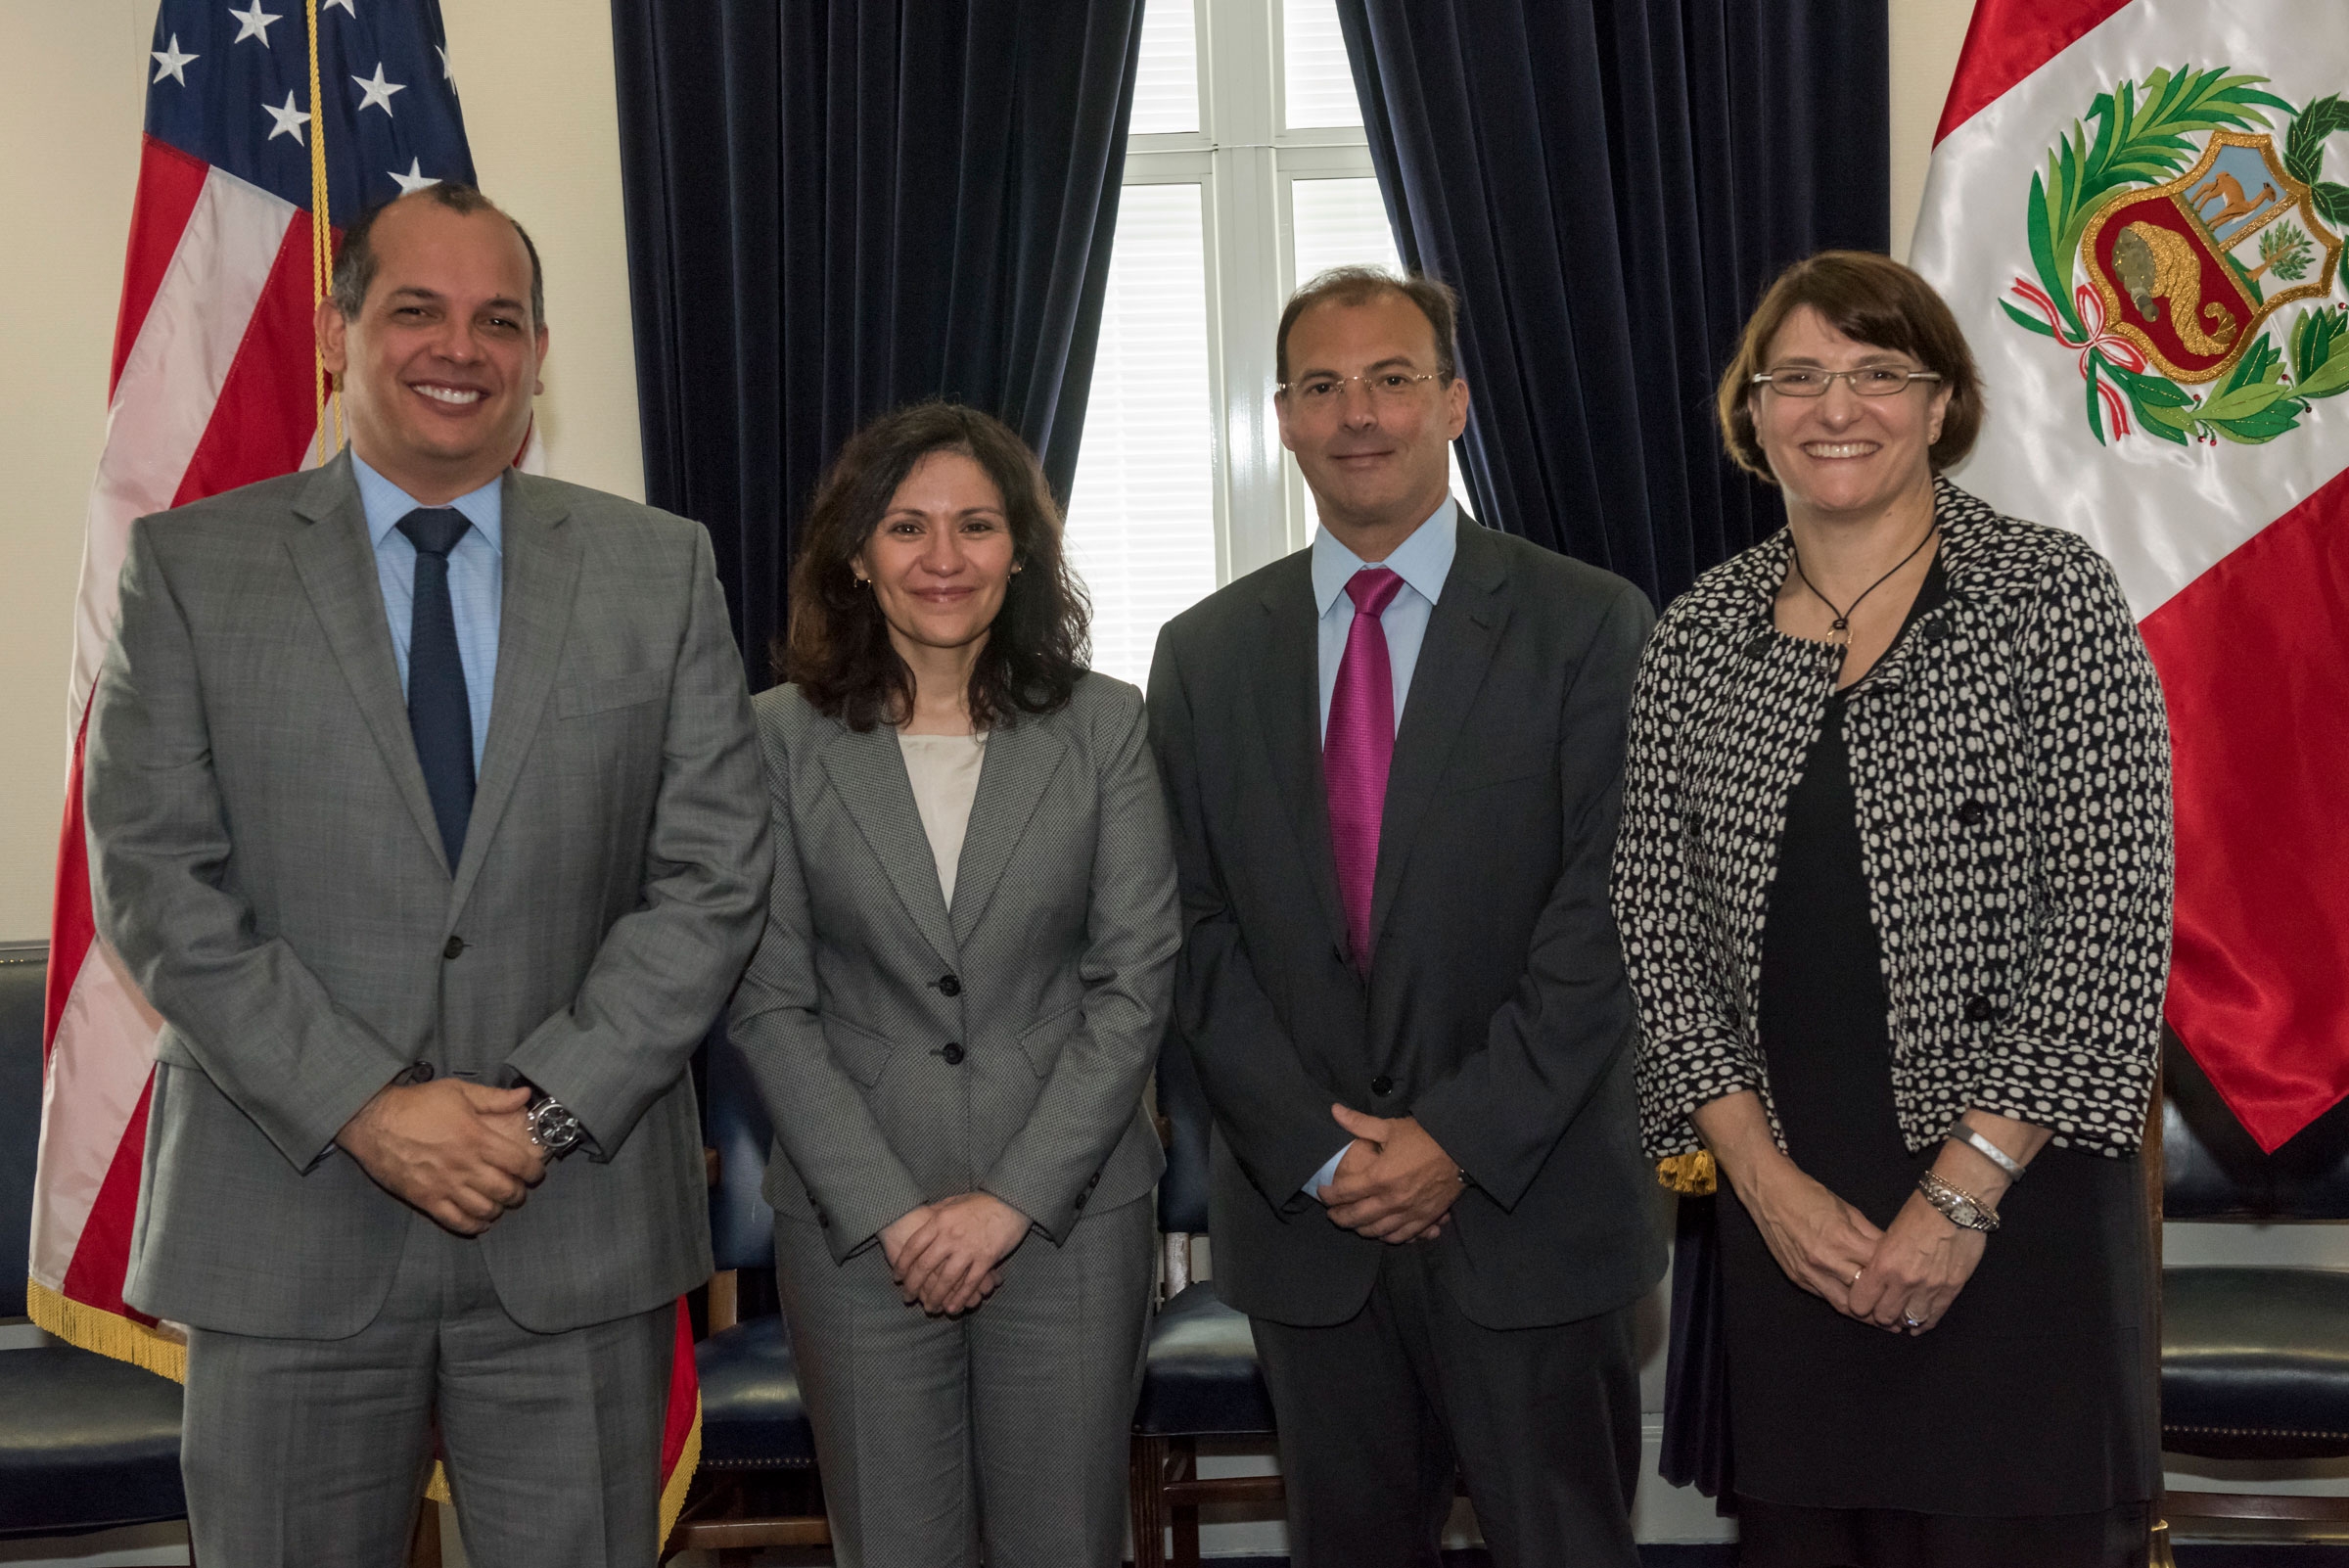 Ambassador Castilla, FTC Chairwoman Ramirez, INDECOPI Chairman Tassano, and Principal Deputy Assistant Attorney General Hesse